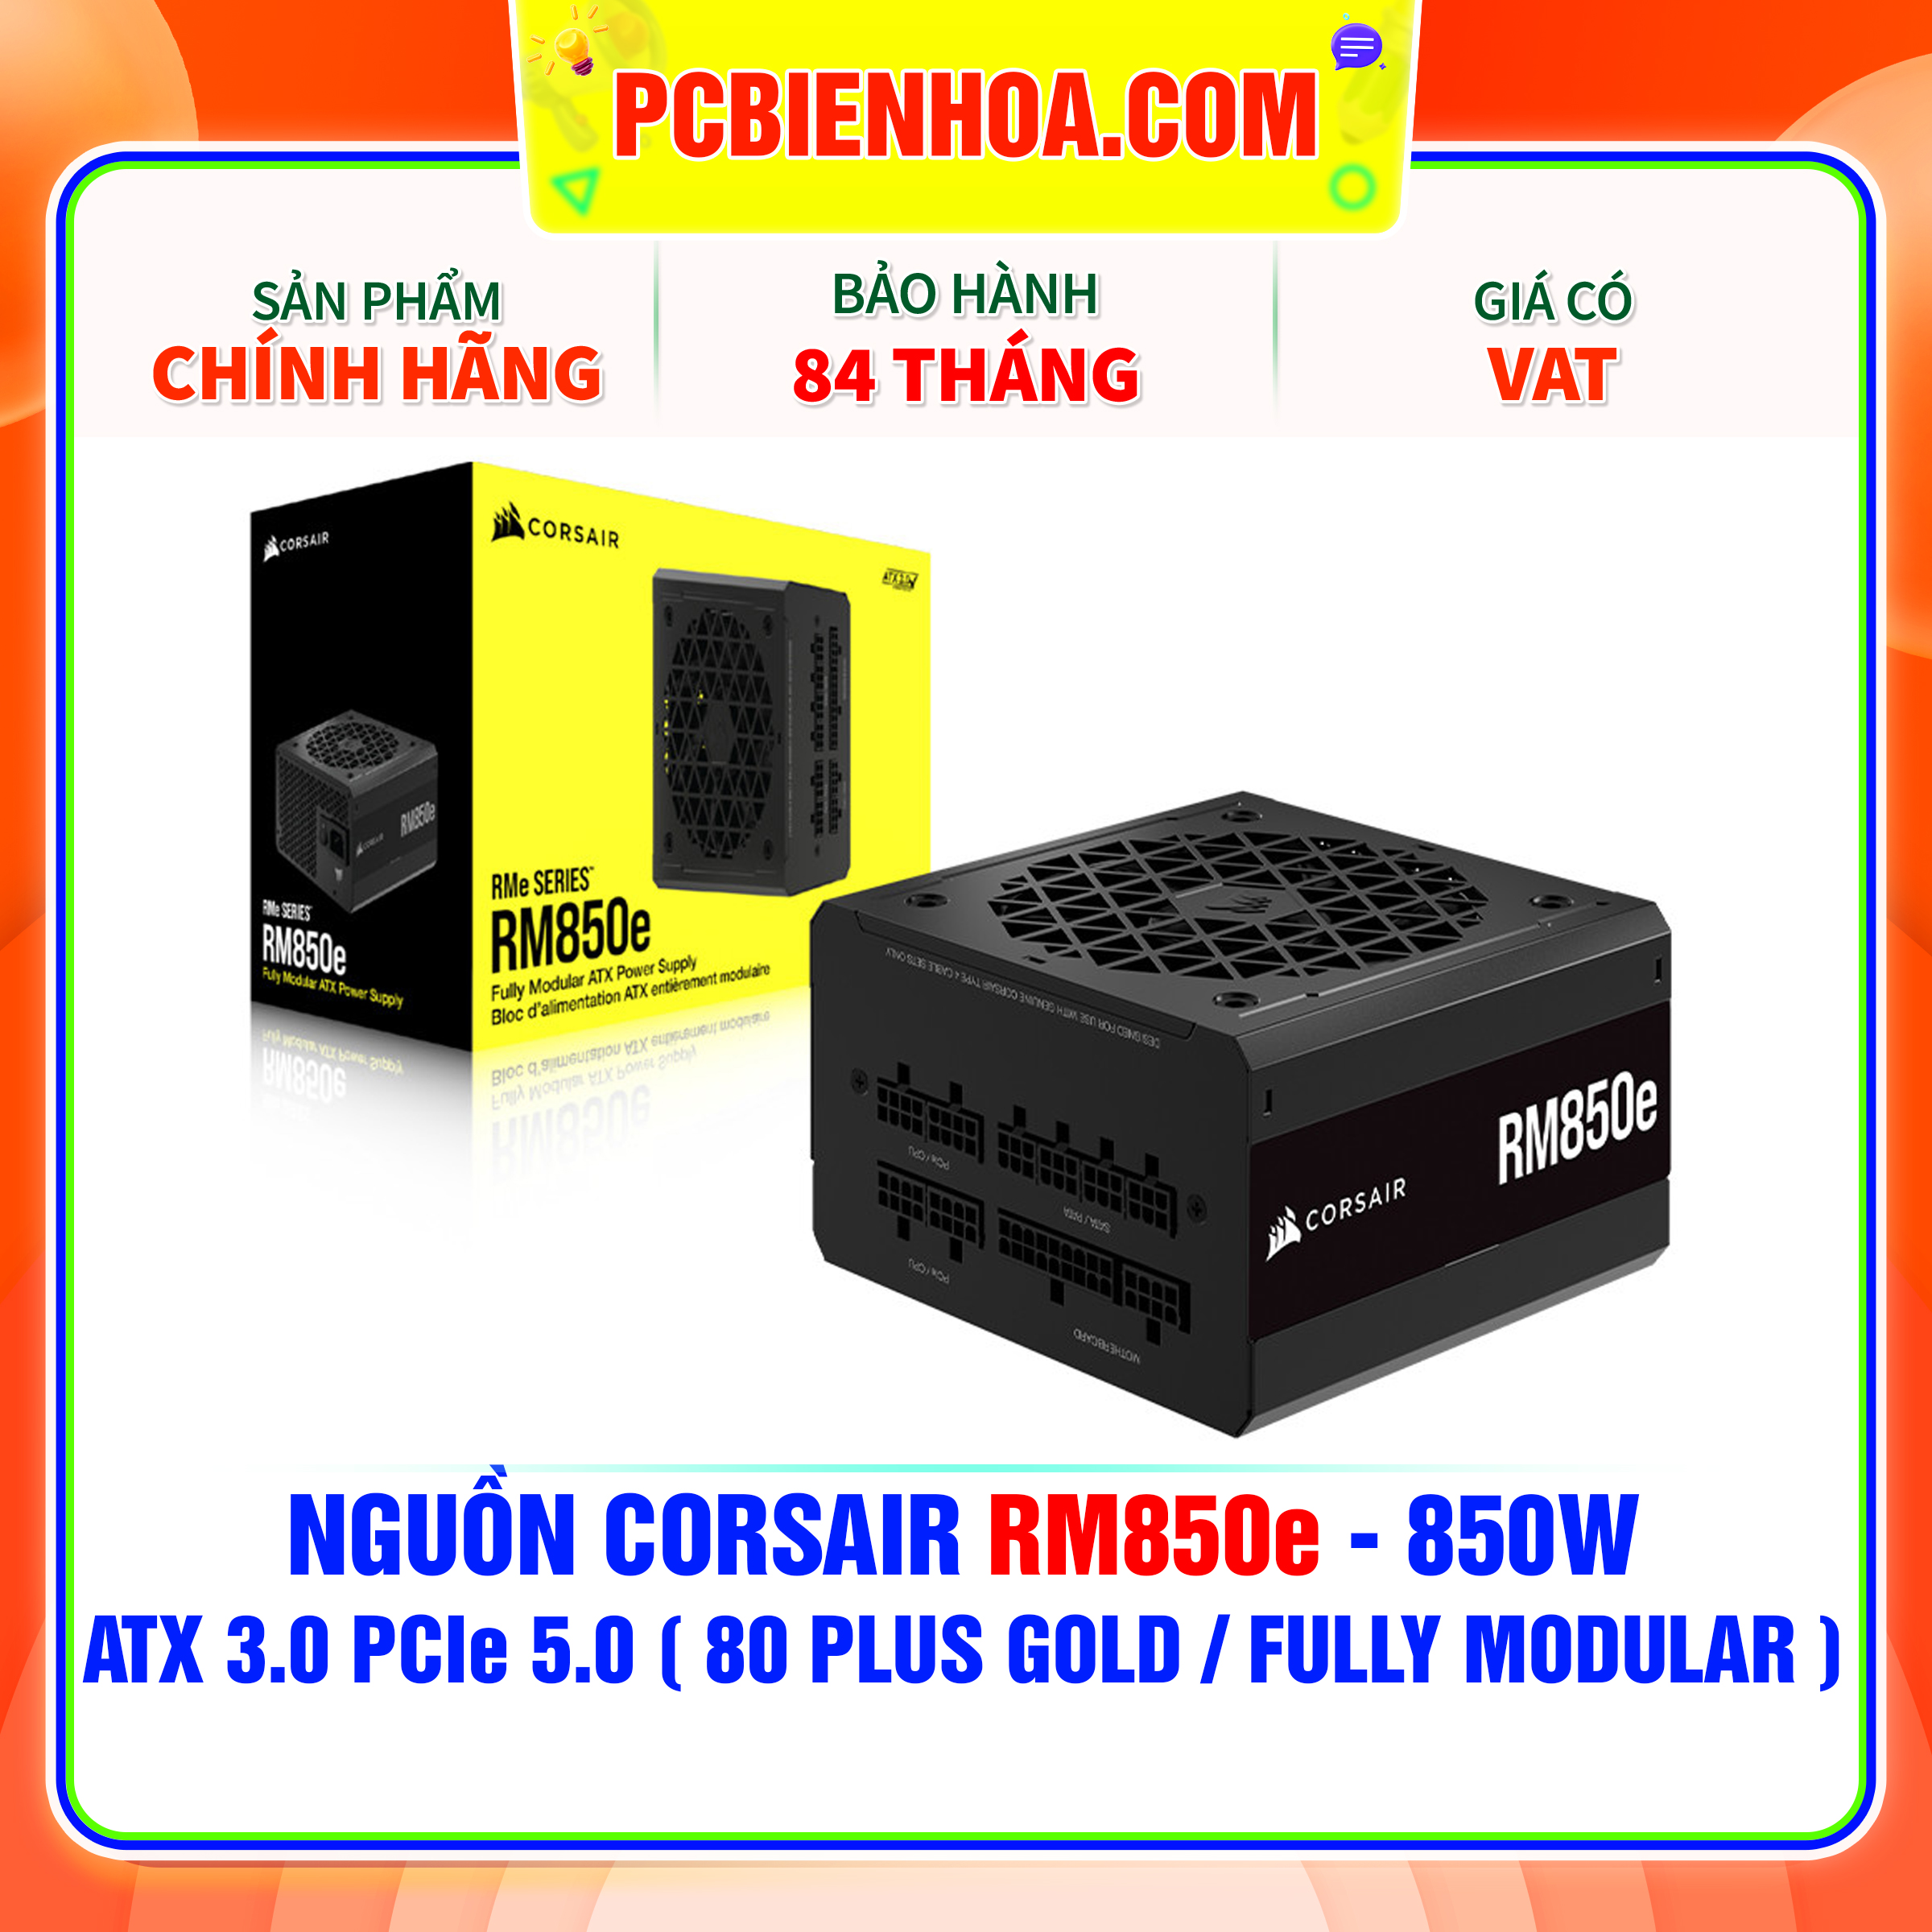 NGUỒN CORSAIR RM850e - 850W ATX 3.0 PCIe 5.0  80 PLUS GOLD FULLY MODULAR